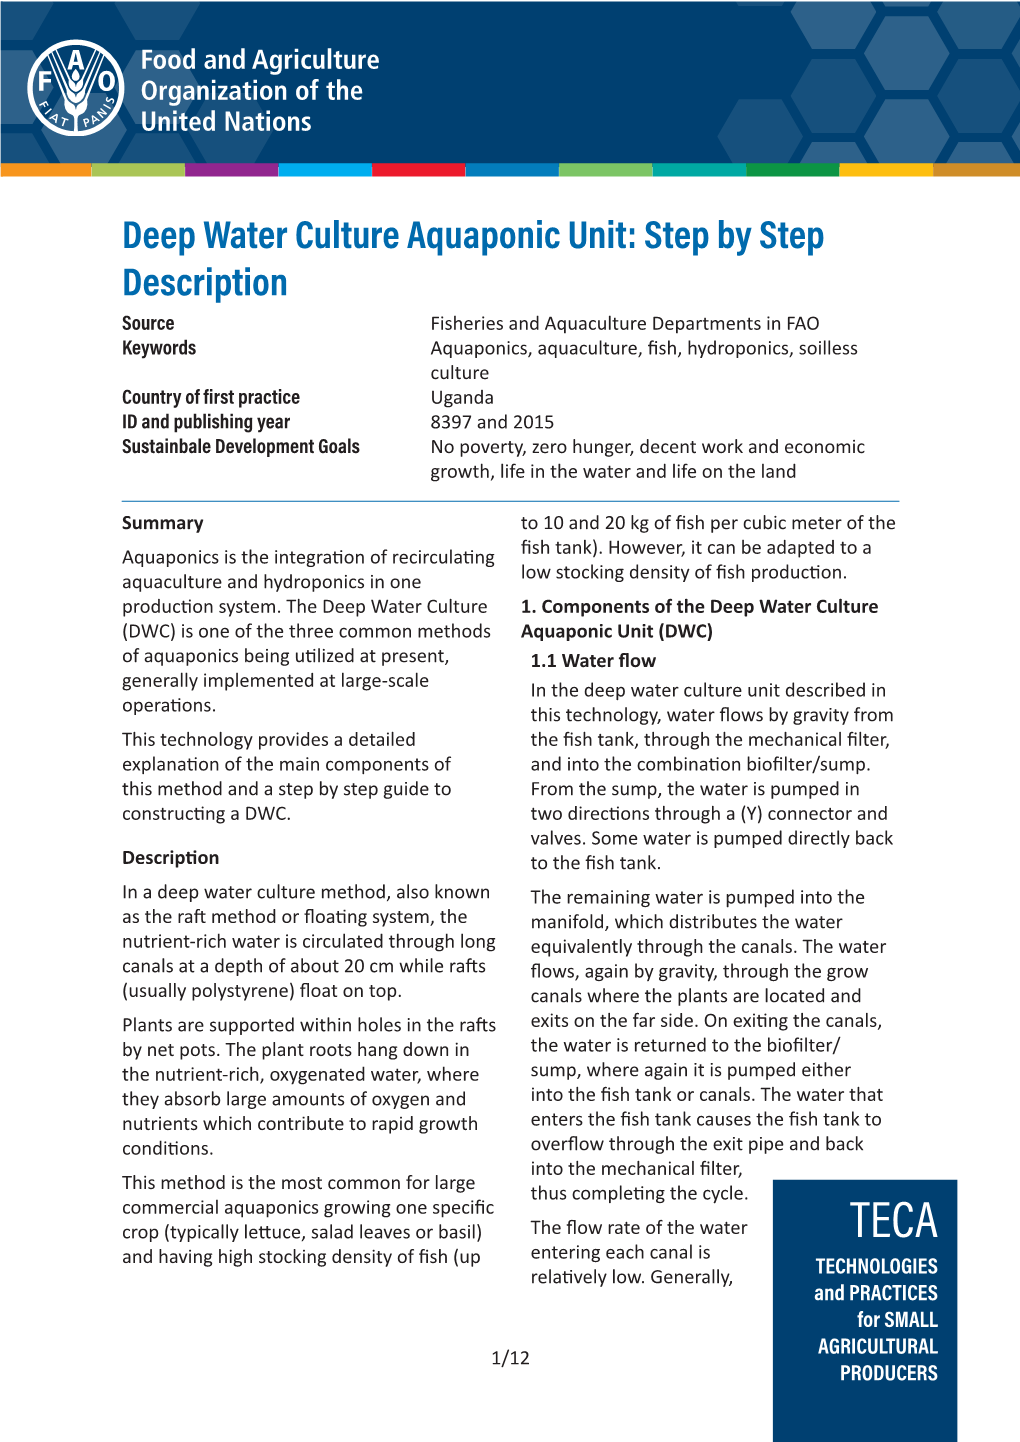 Deep Water Culture Aquaponic Unit